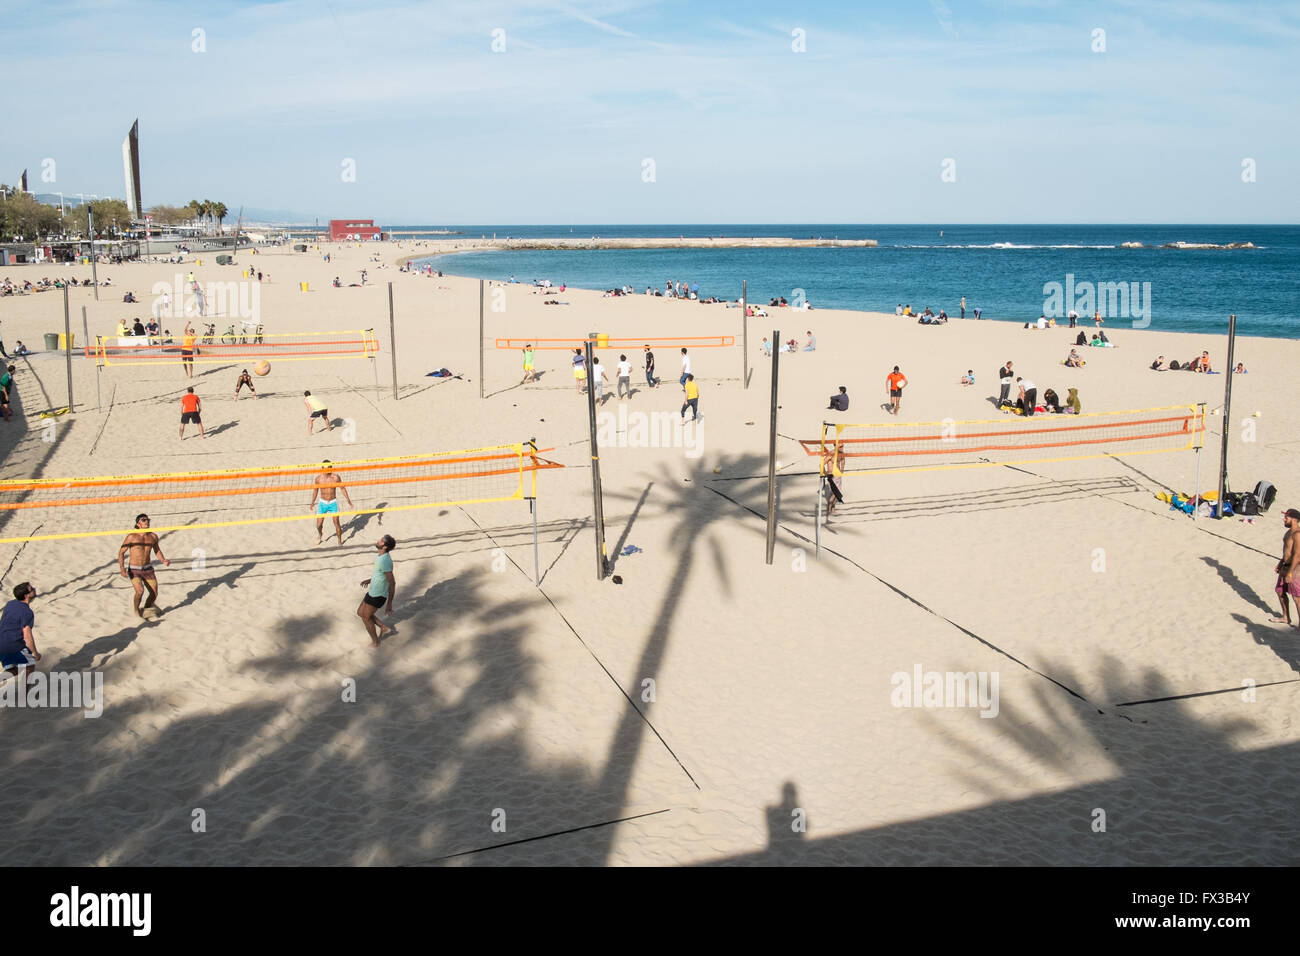 Playing Beach Volleyball on sandy sand at Playa,Plage, Nova Icaria Beach, Barcelona,Catalonia,Spain,Europe. Stock Photo